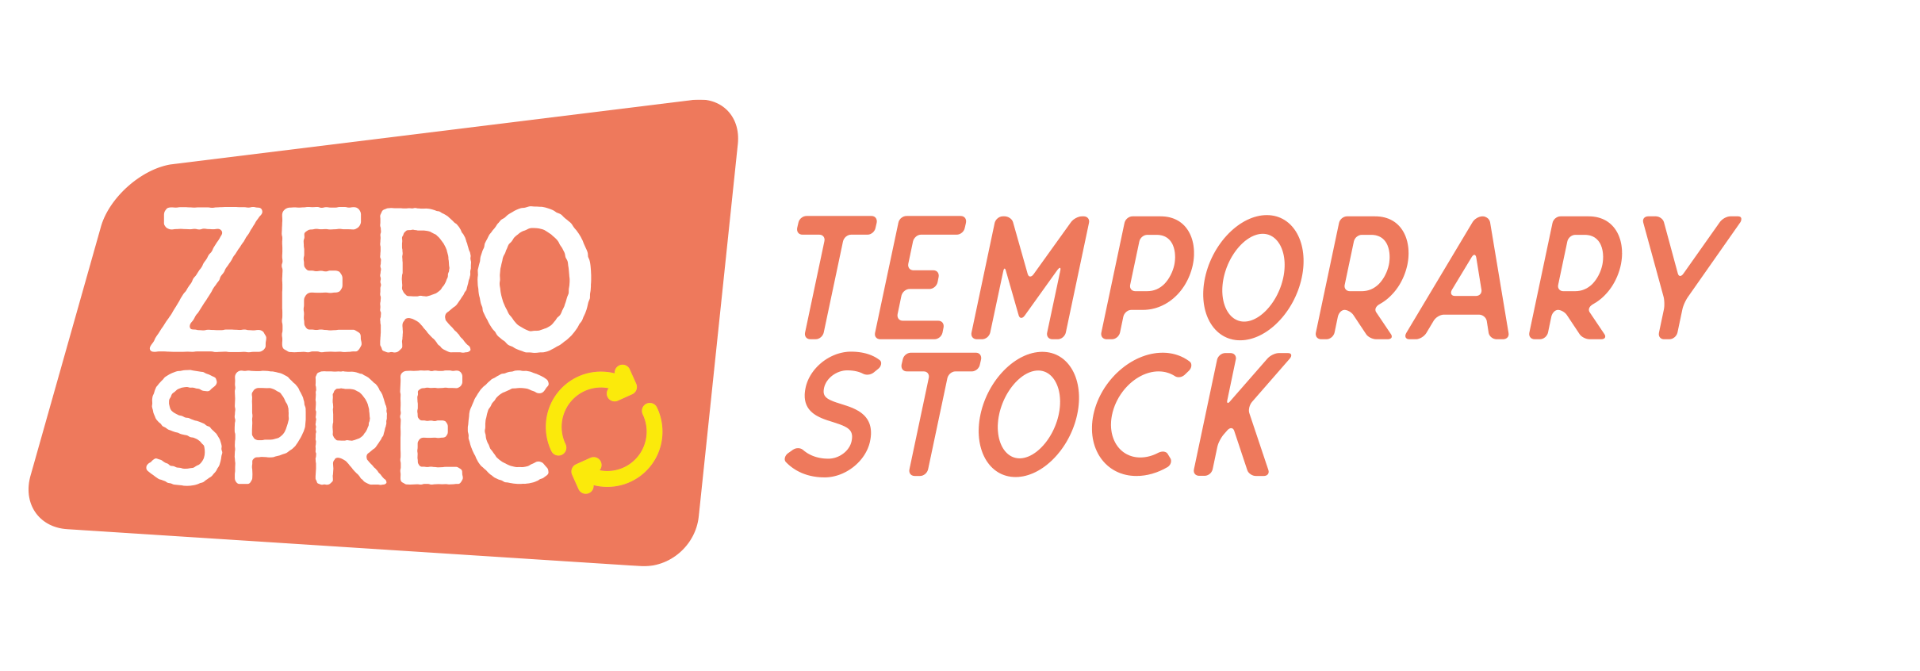 zero spreco temporay stock